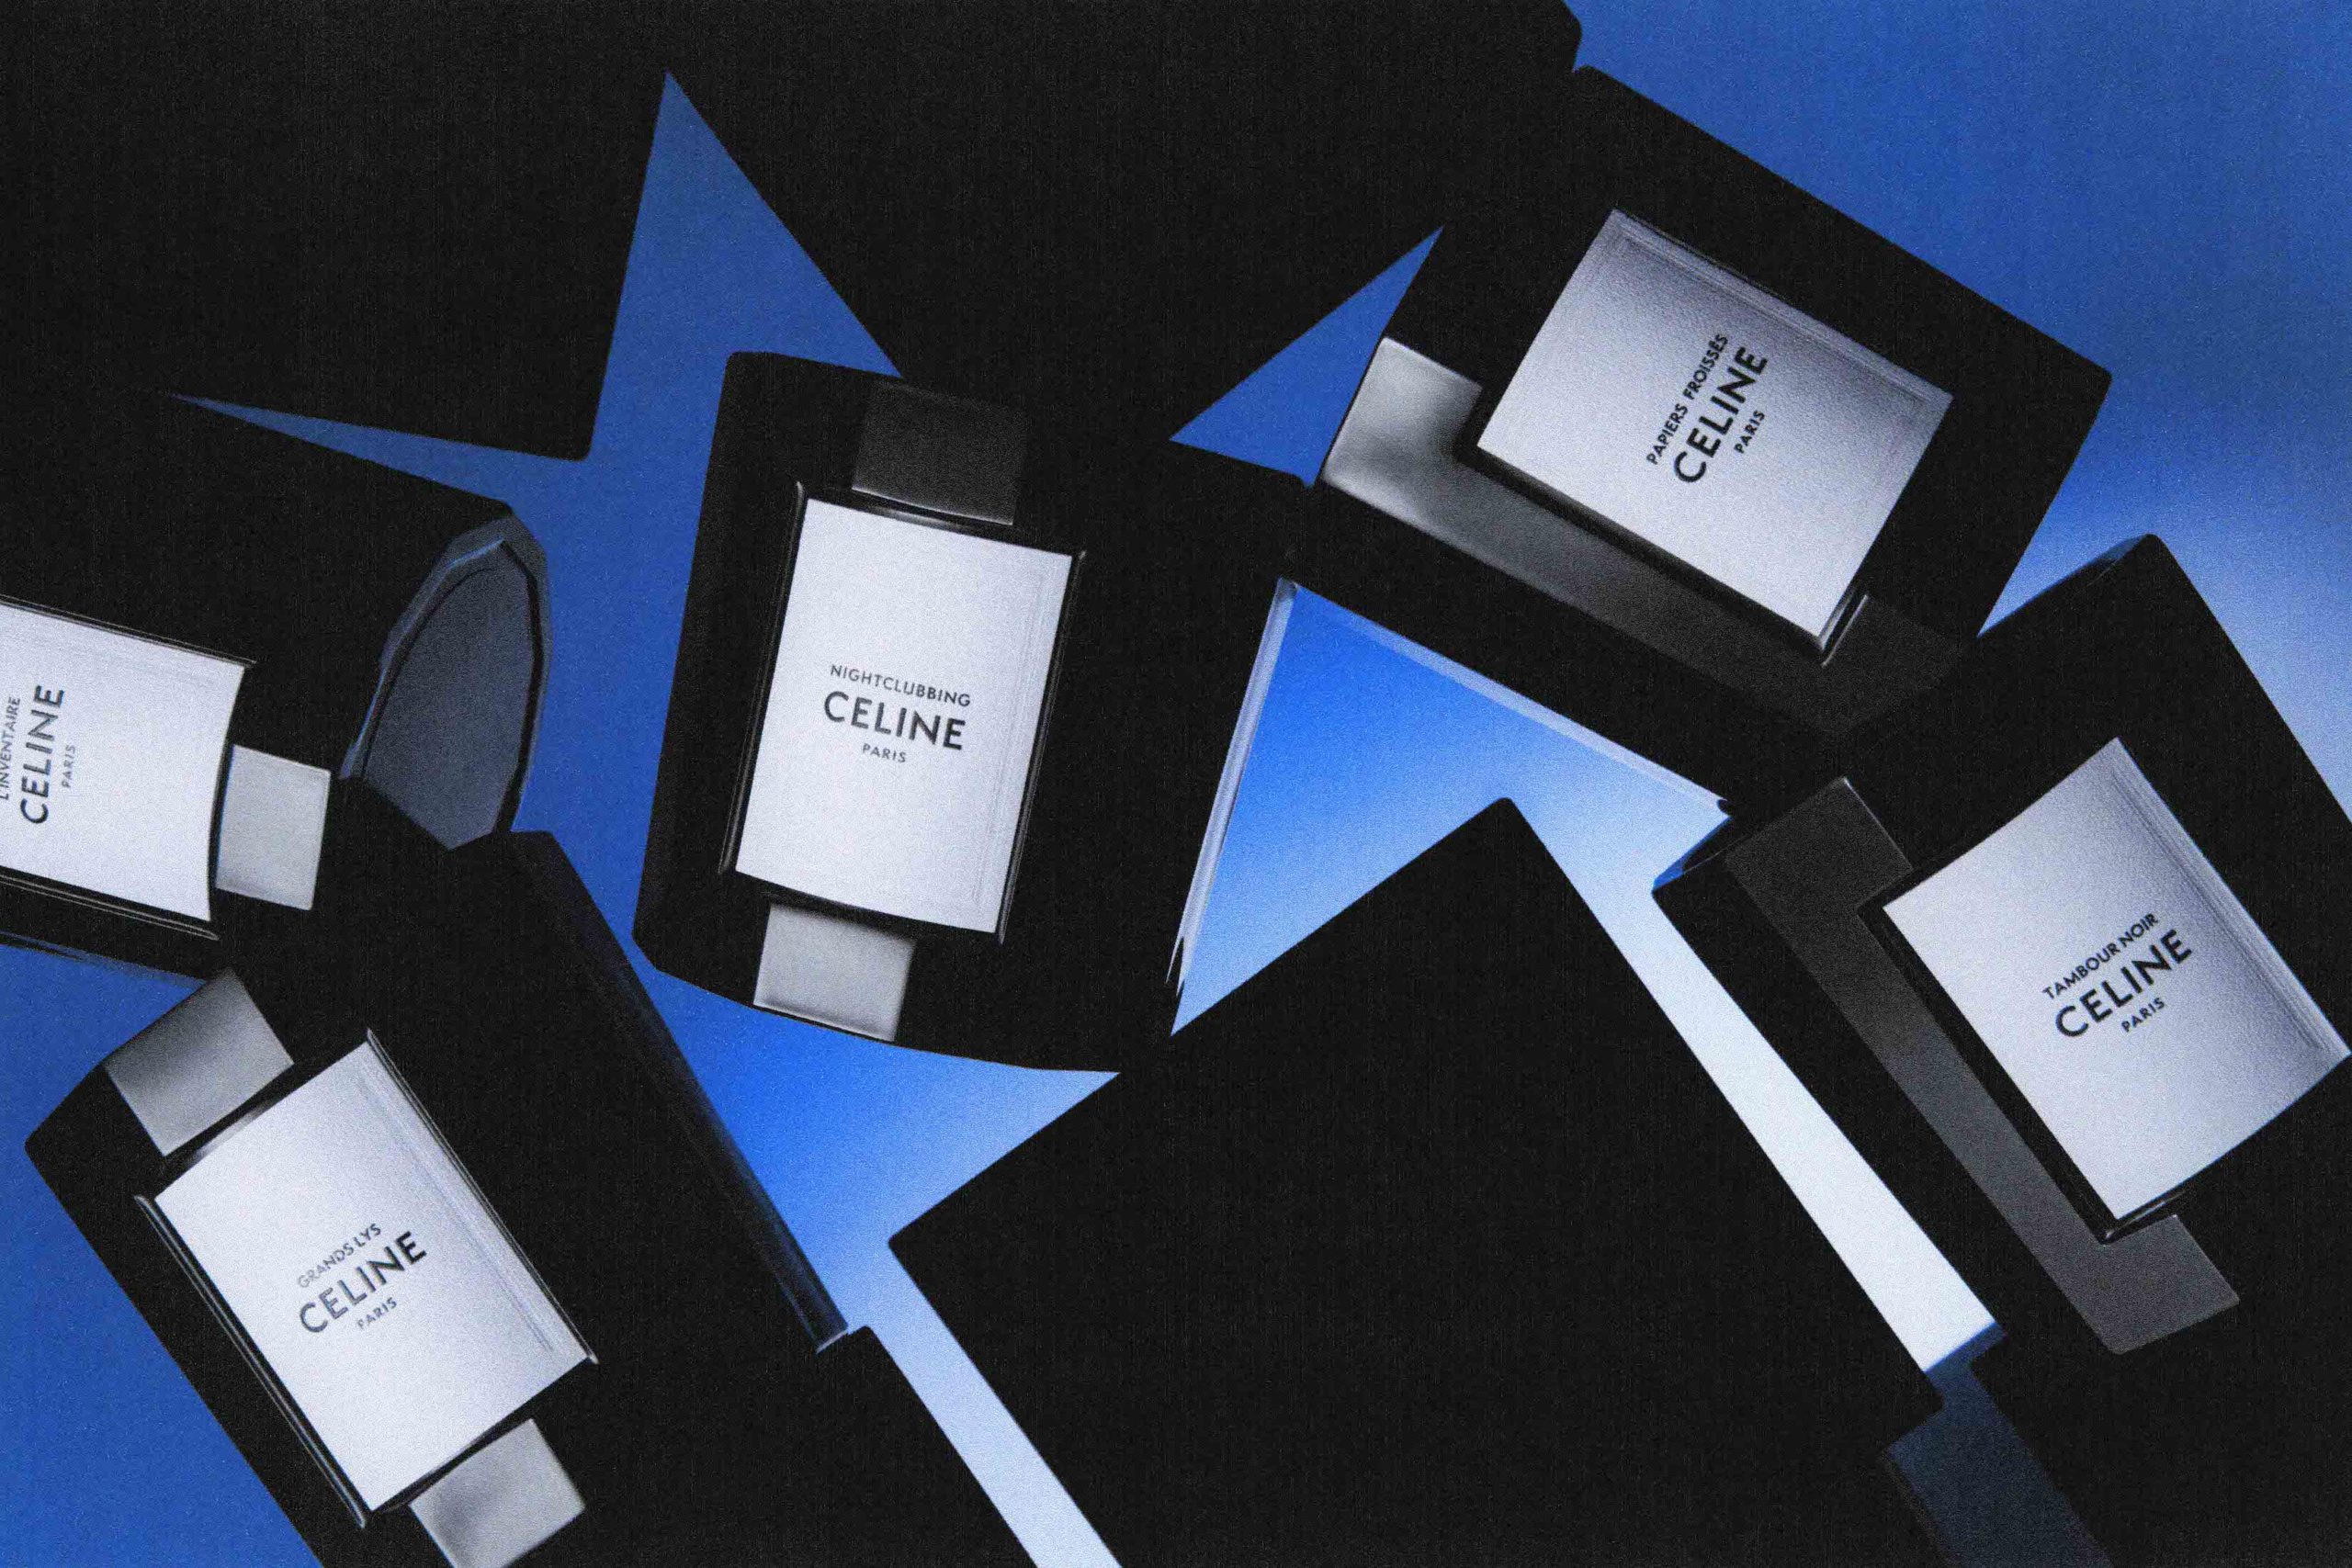  CELINE by Hedi Slimane Haute Parfumerie Candle Collection ($95, available online at Celine.com.)